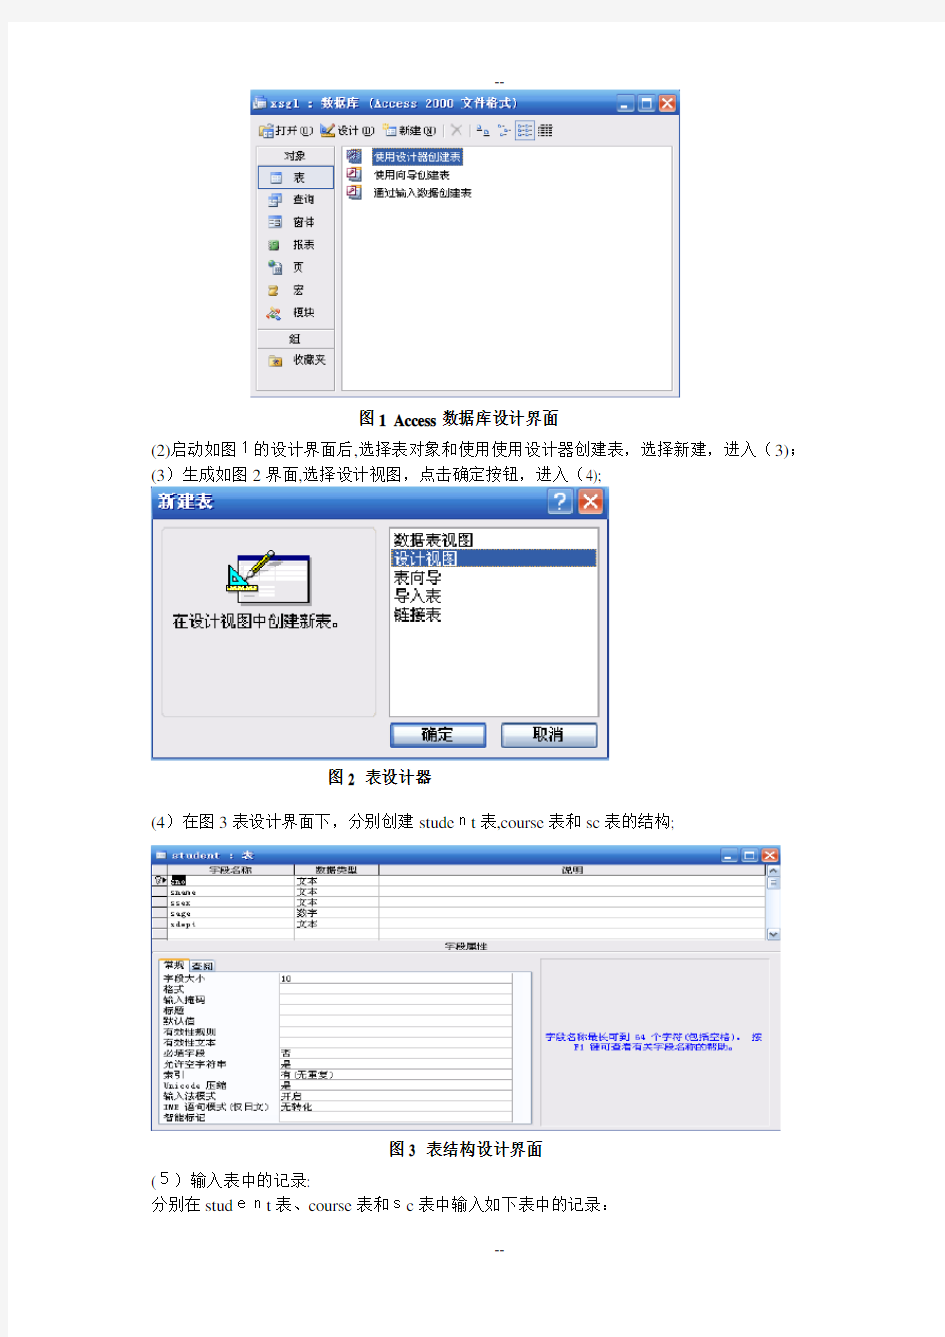 SQLSERVER数据库管理系统软件的使用